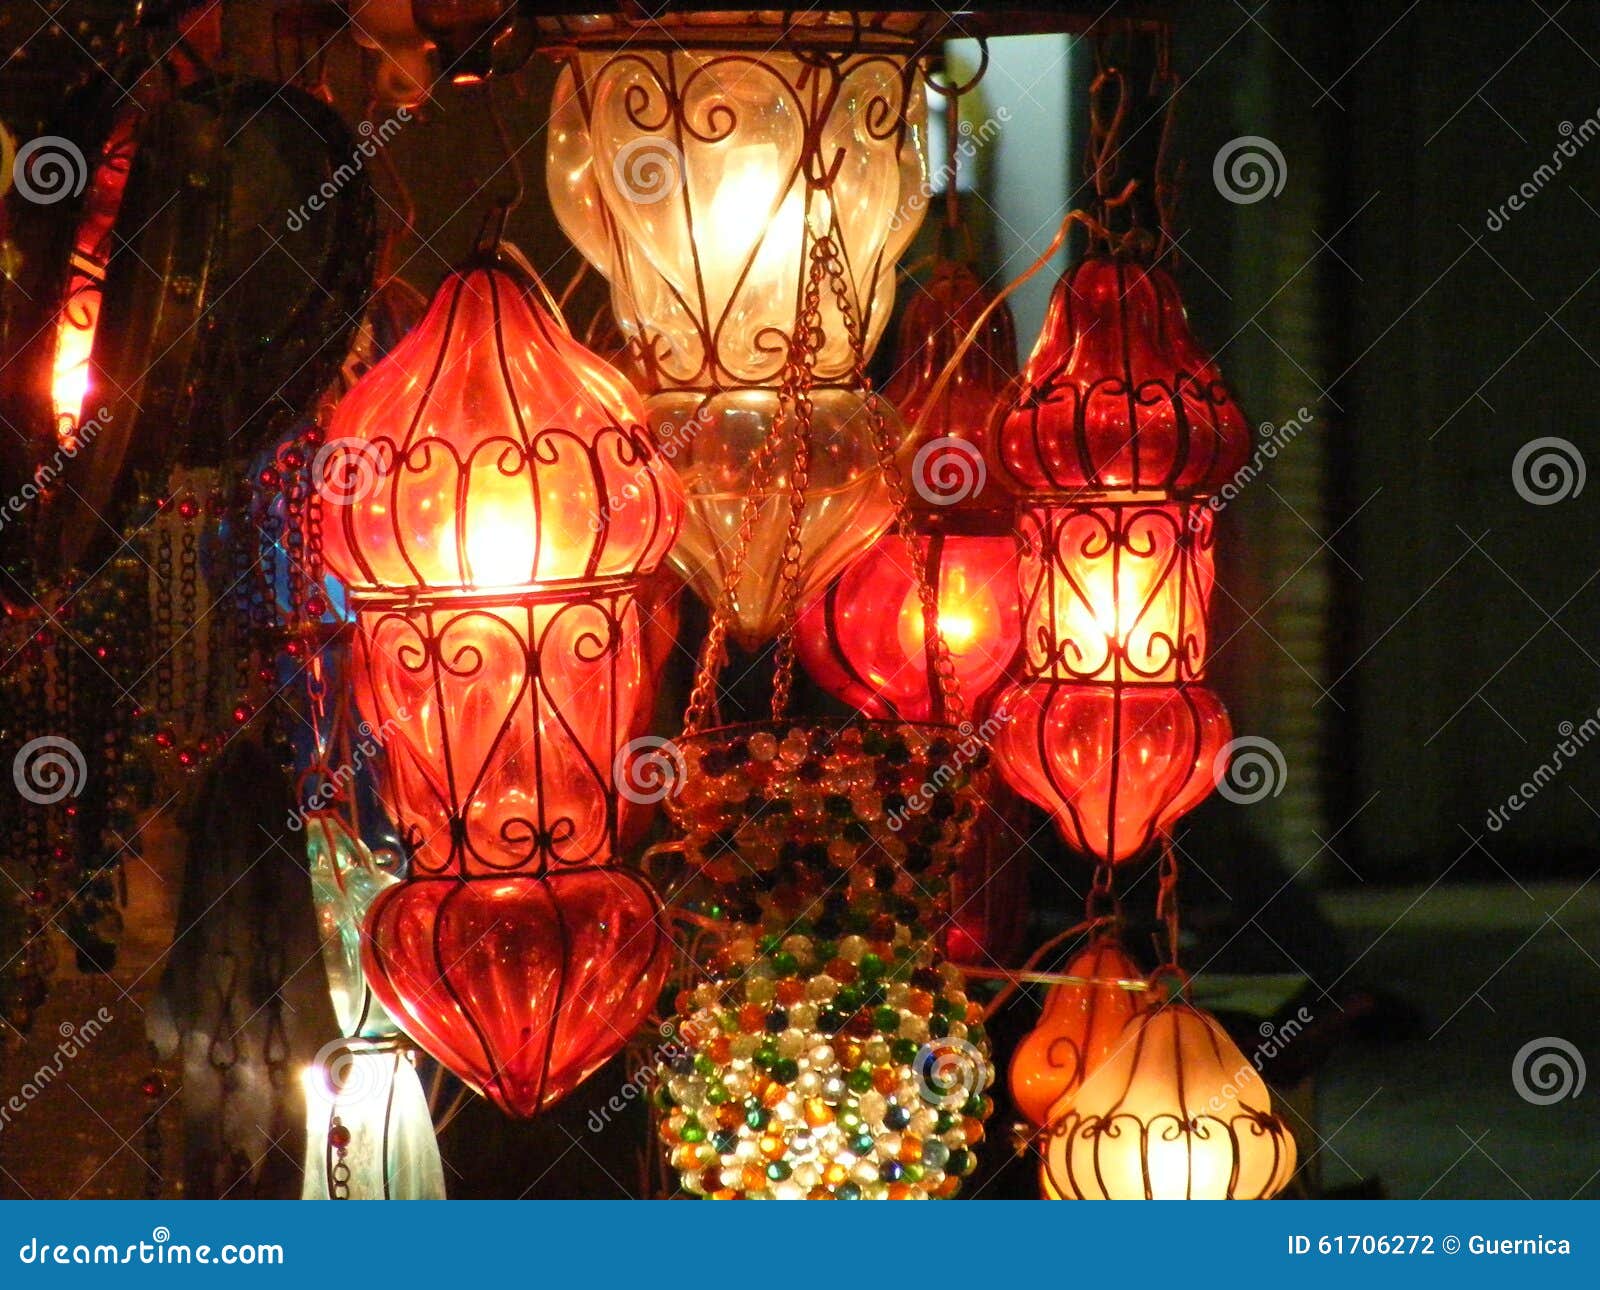 close up of shining lanterns in khan el khalili souq market with arabic handwriting on it in egypt cairo